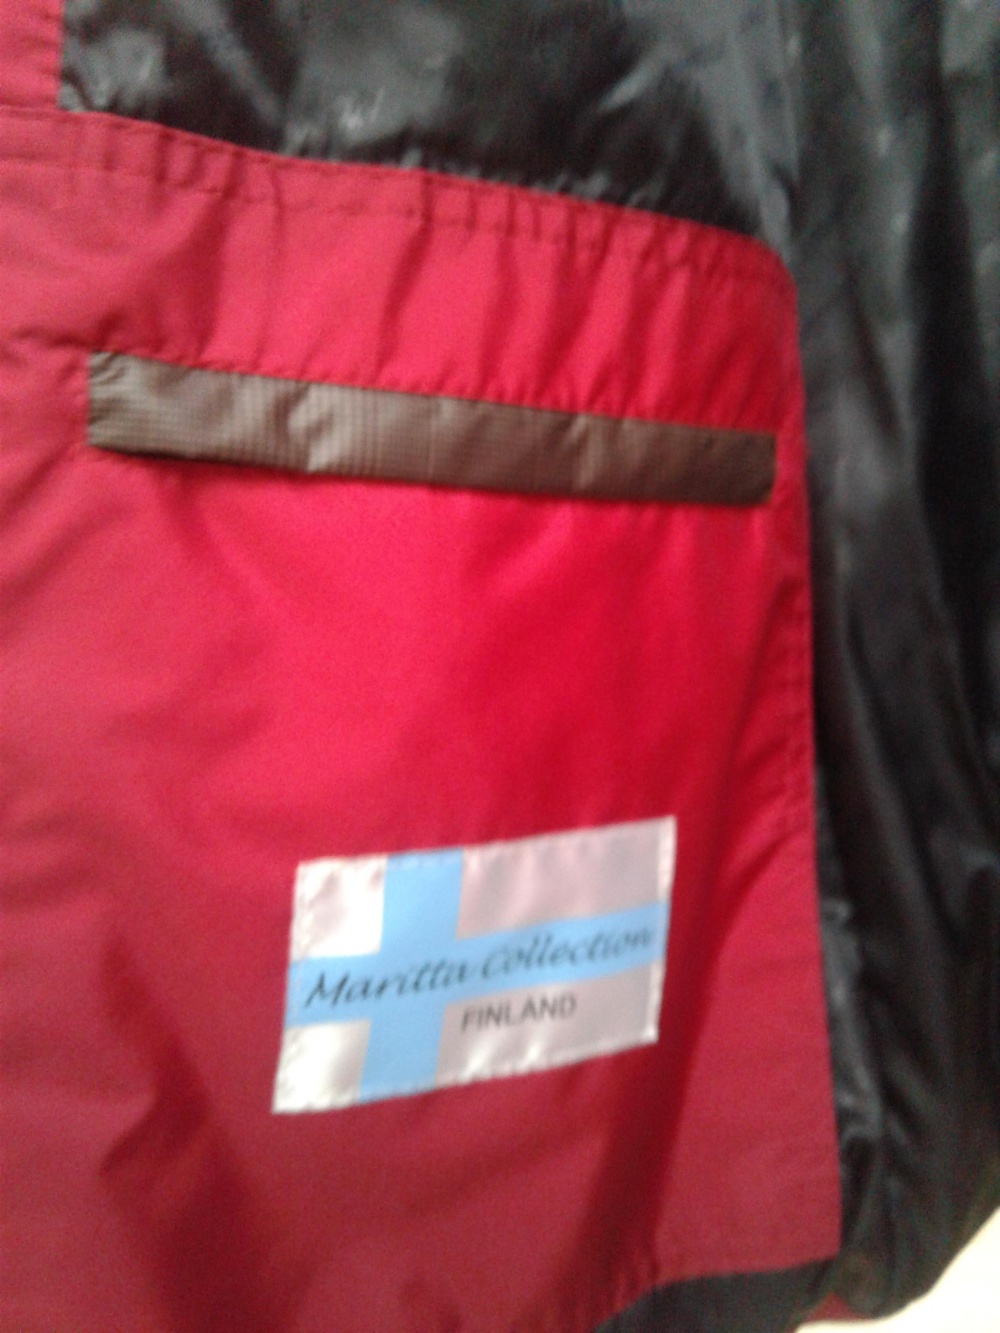 Куртка финляндия Maritta Collection 46-48 размер